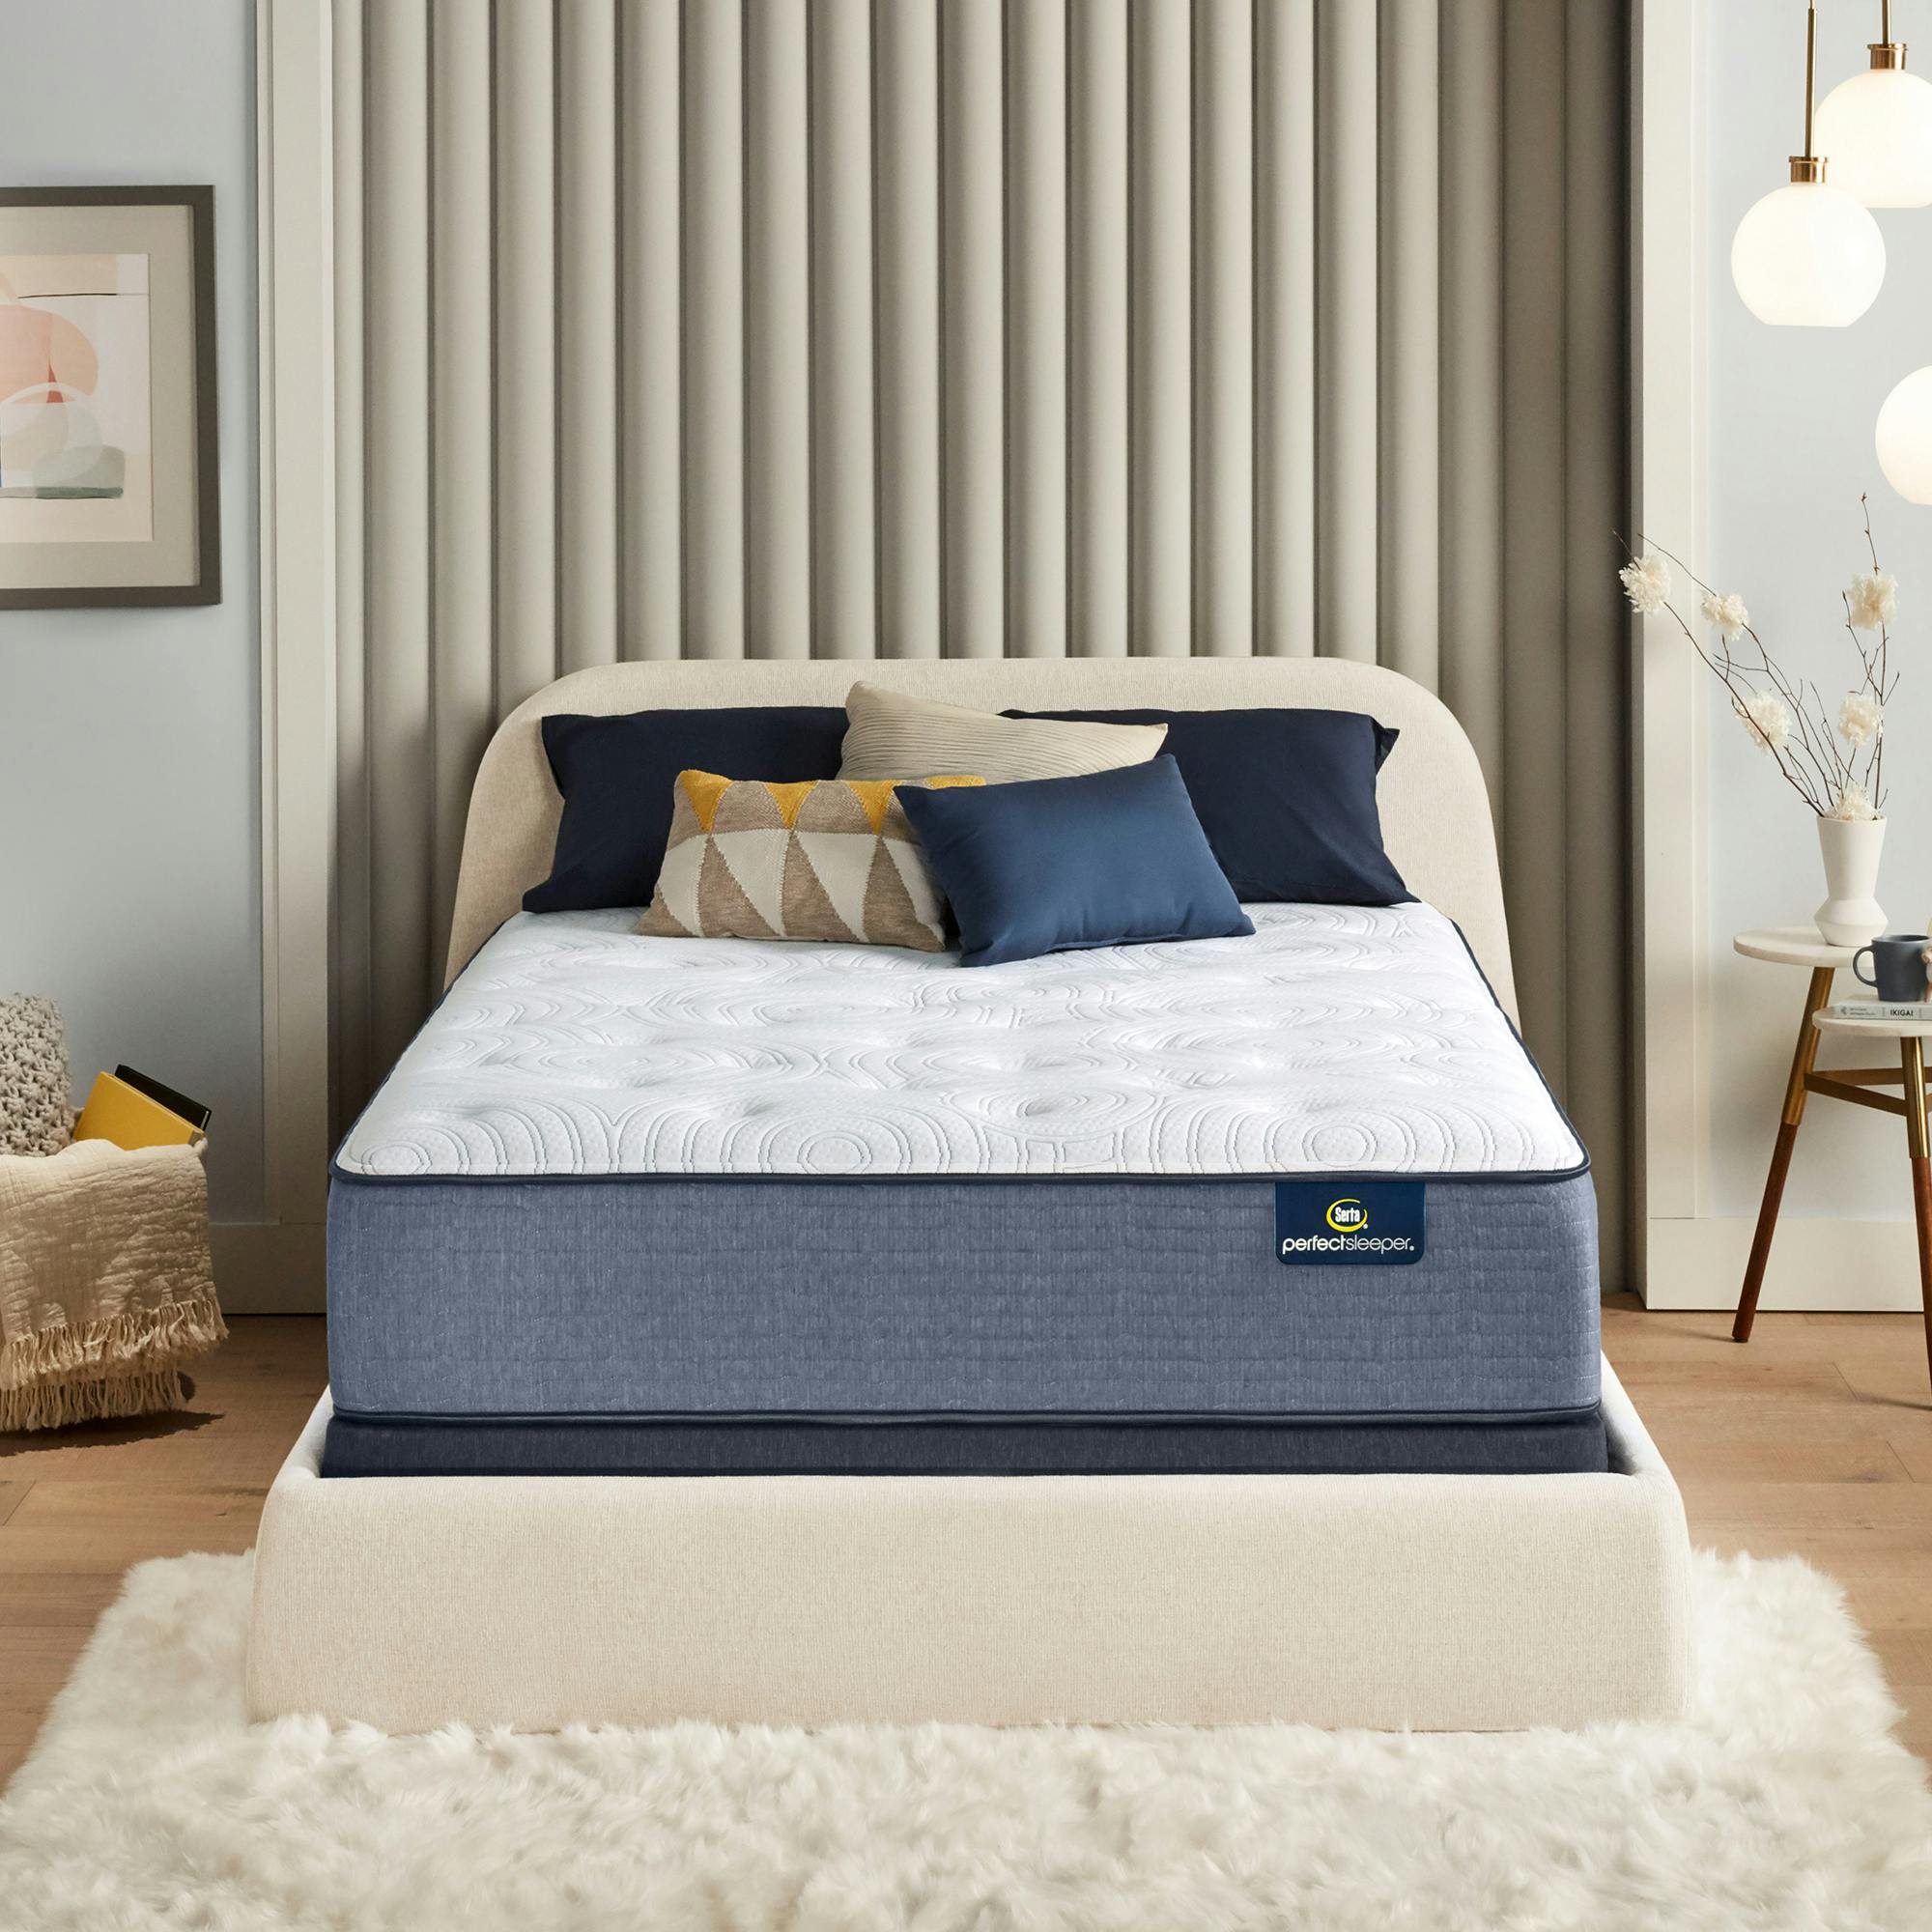 Serta Perfect Sleeper Supportive Mattress, Serta King Bed Frame